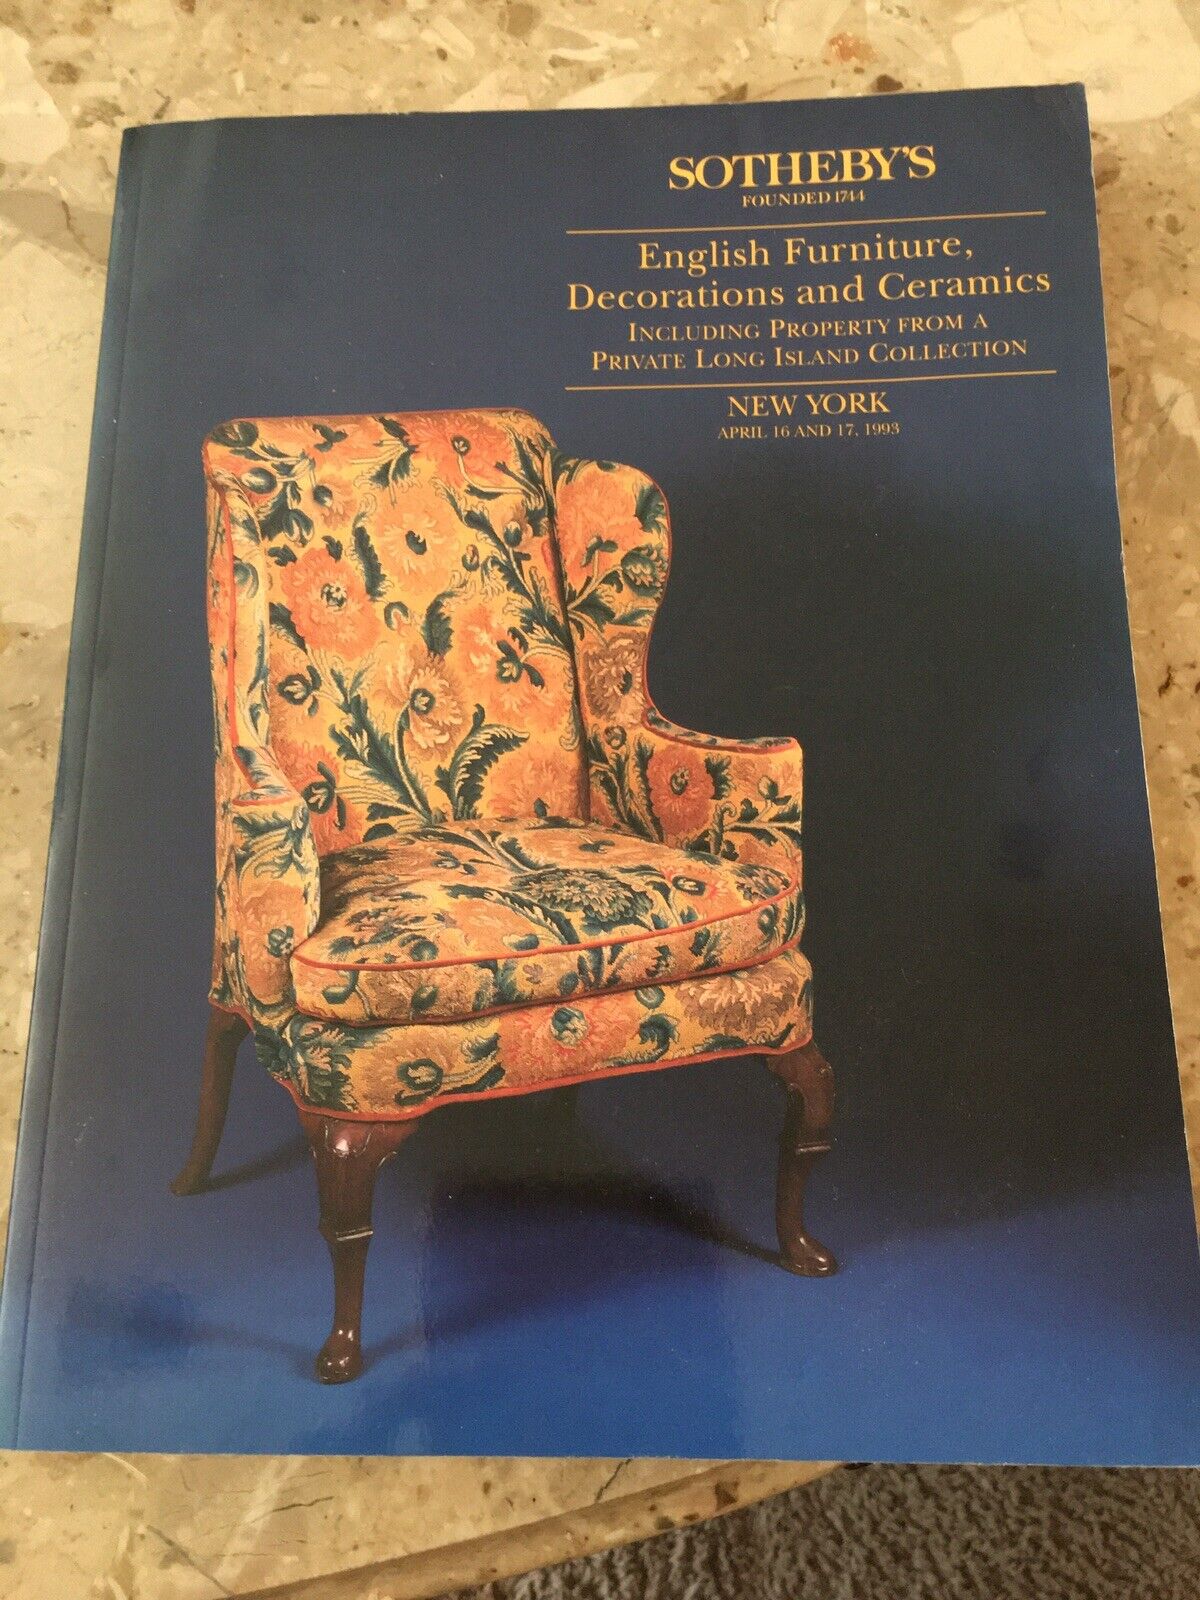 Sothebys Auction Catalog April 16/17 1993 English Furn.  Decorations & Ceramics